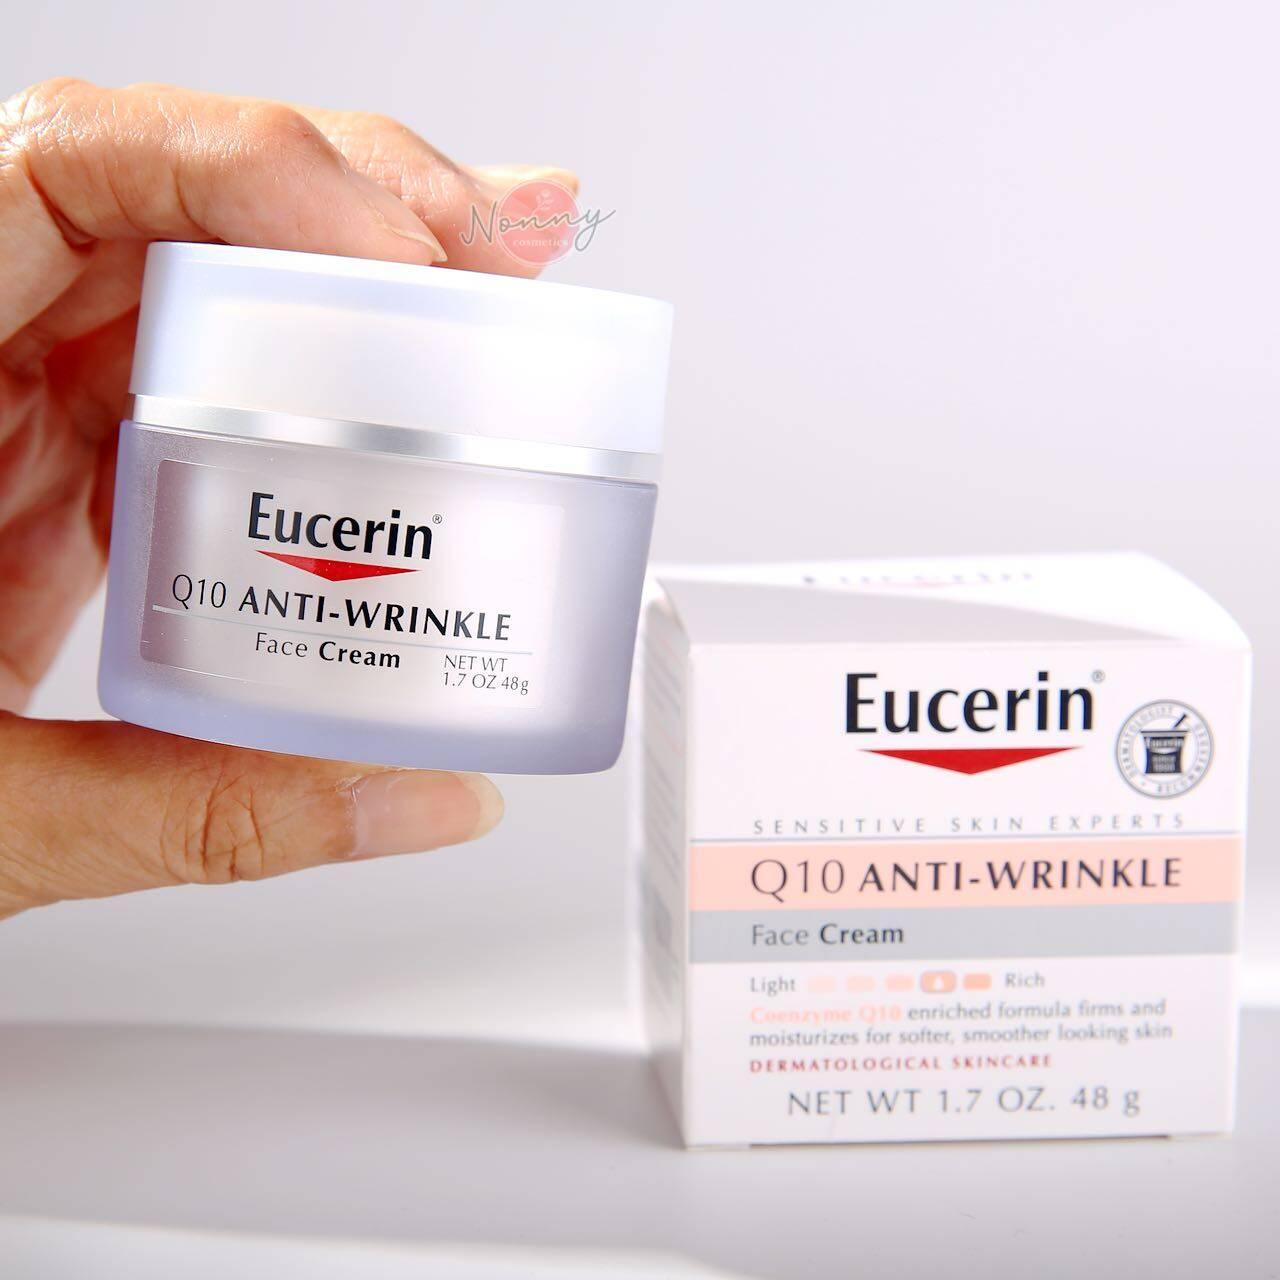 2. Eucerin Q10 Anti-Wrinkle Face Cream 